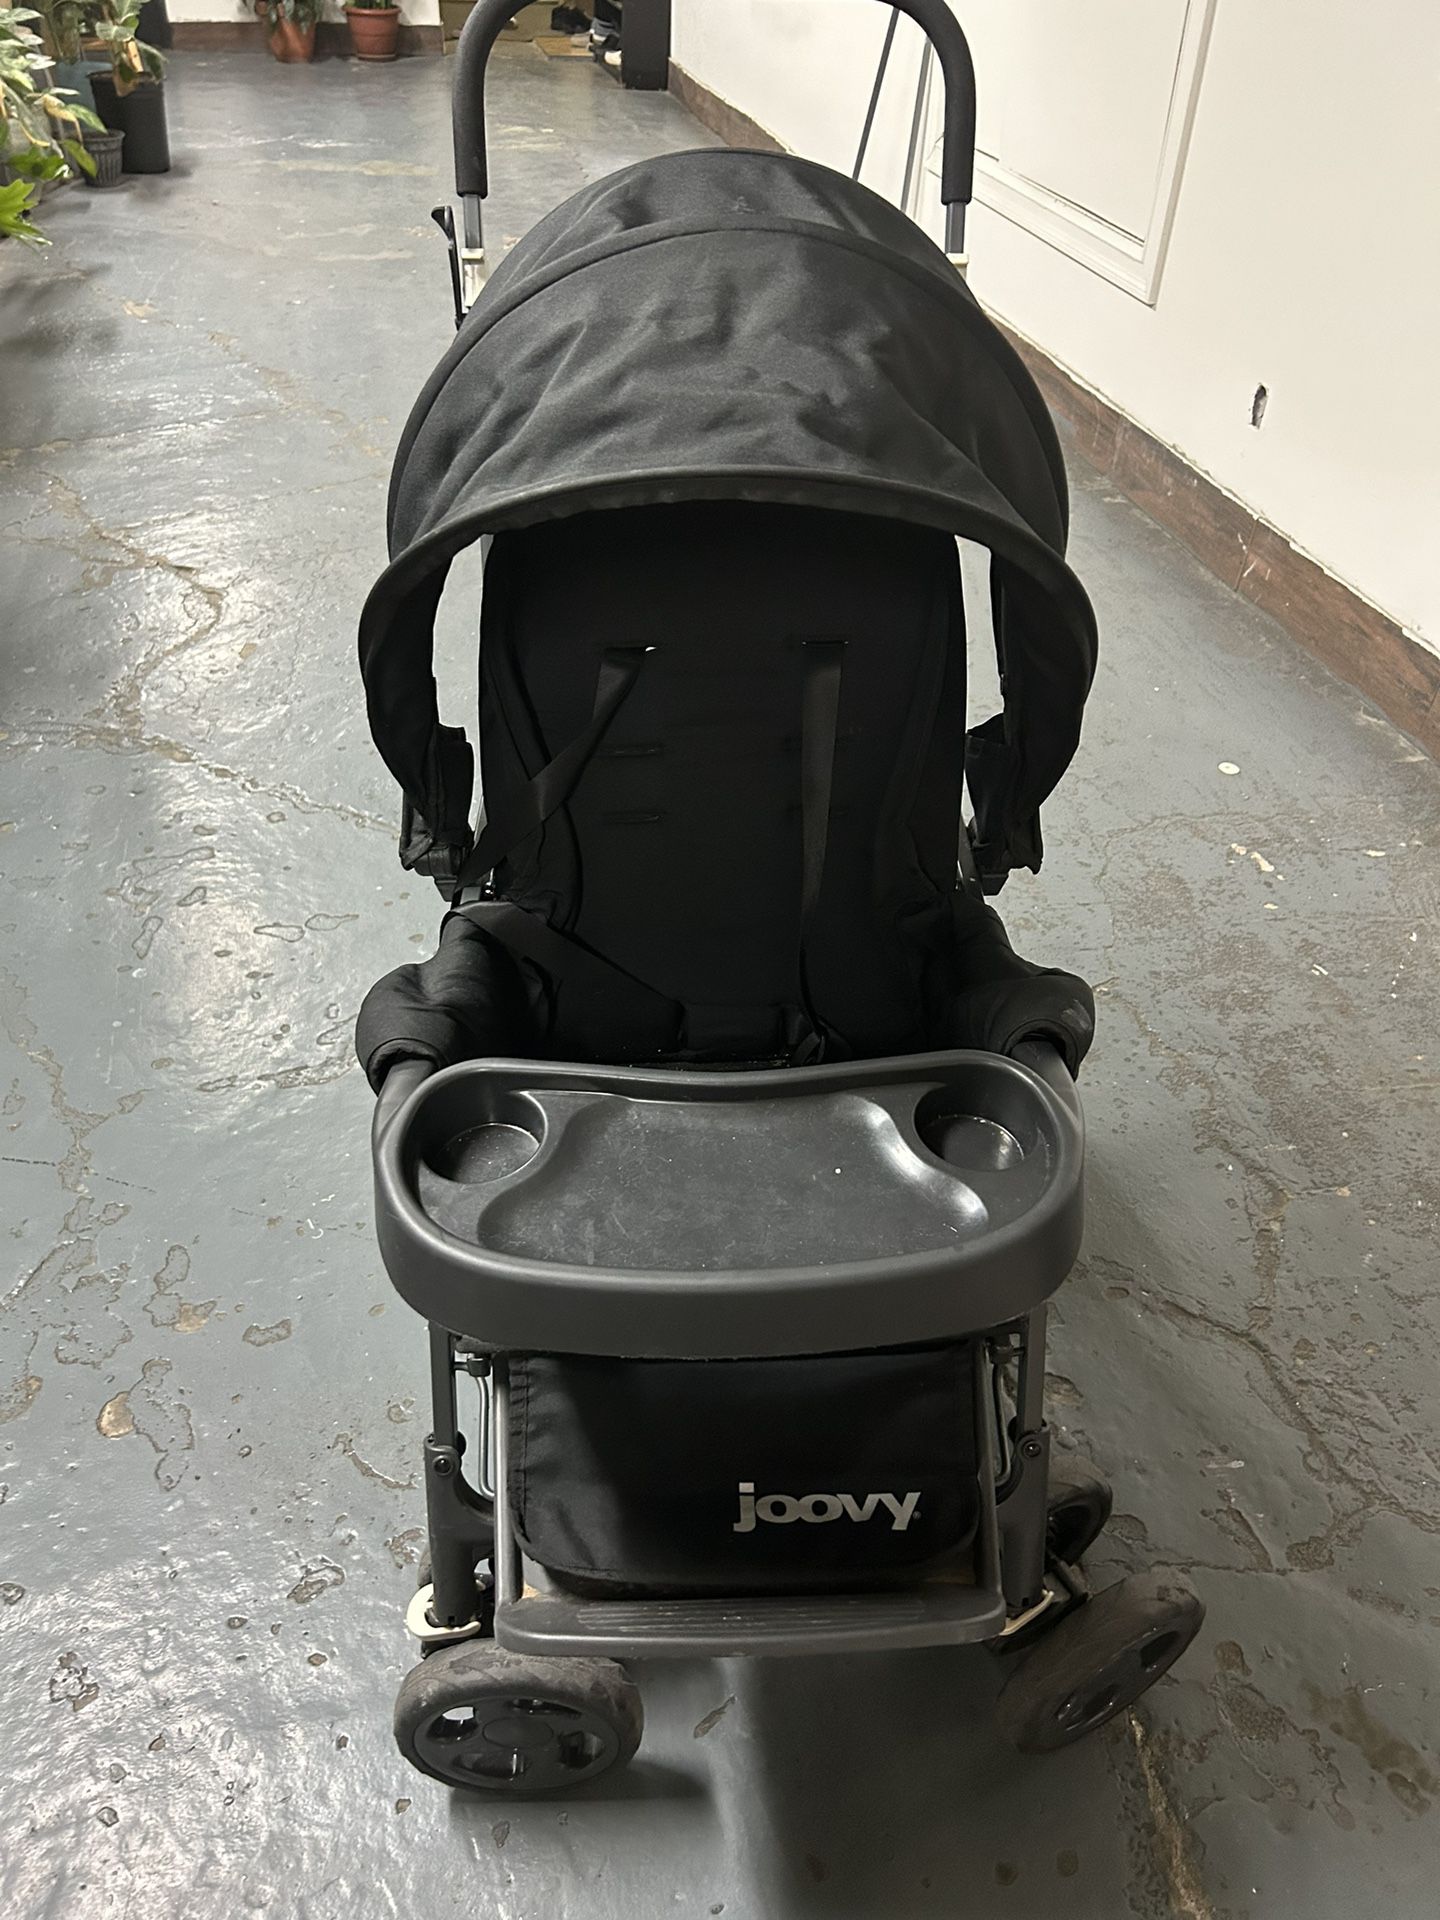 Joovy Double Stroller With Warranty! 